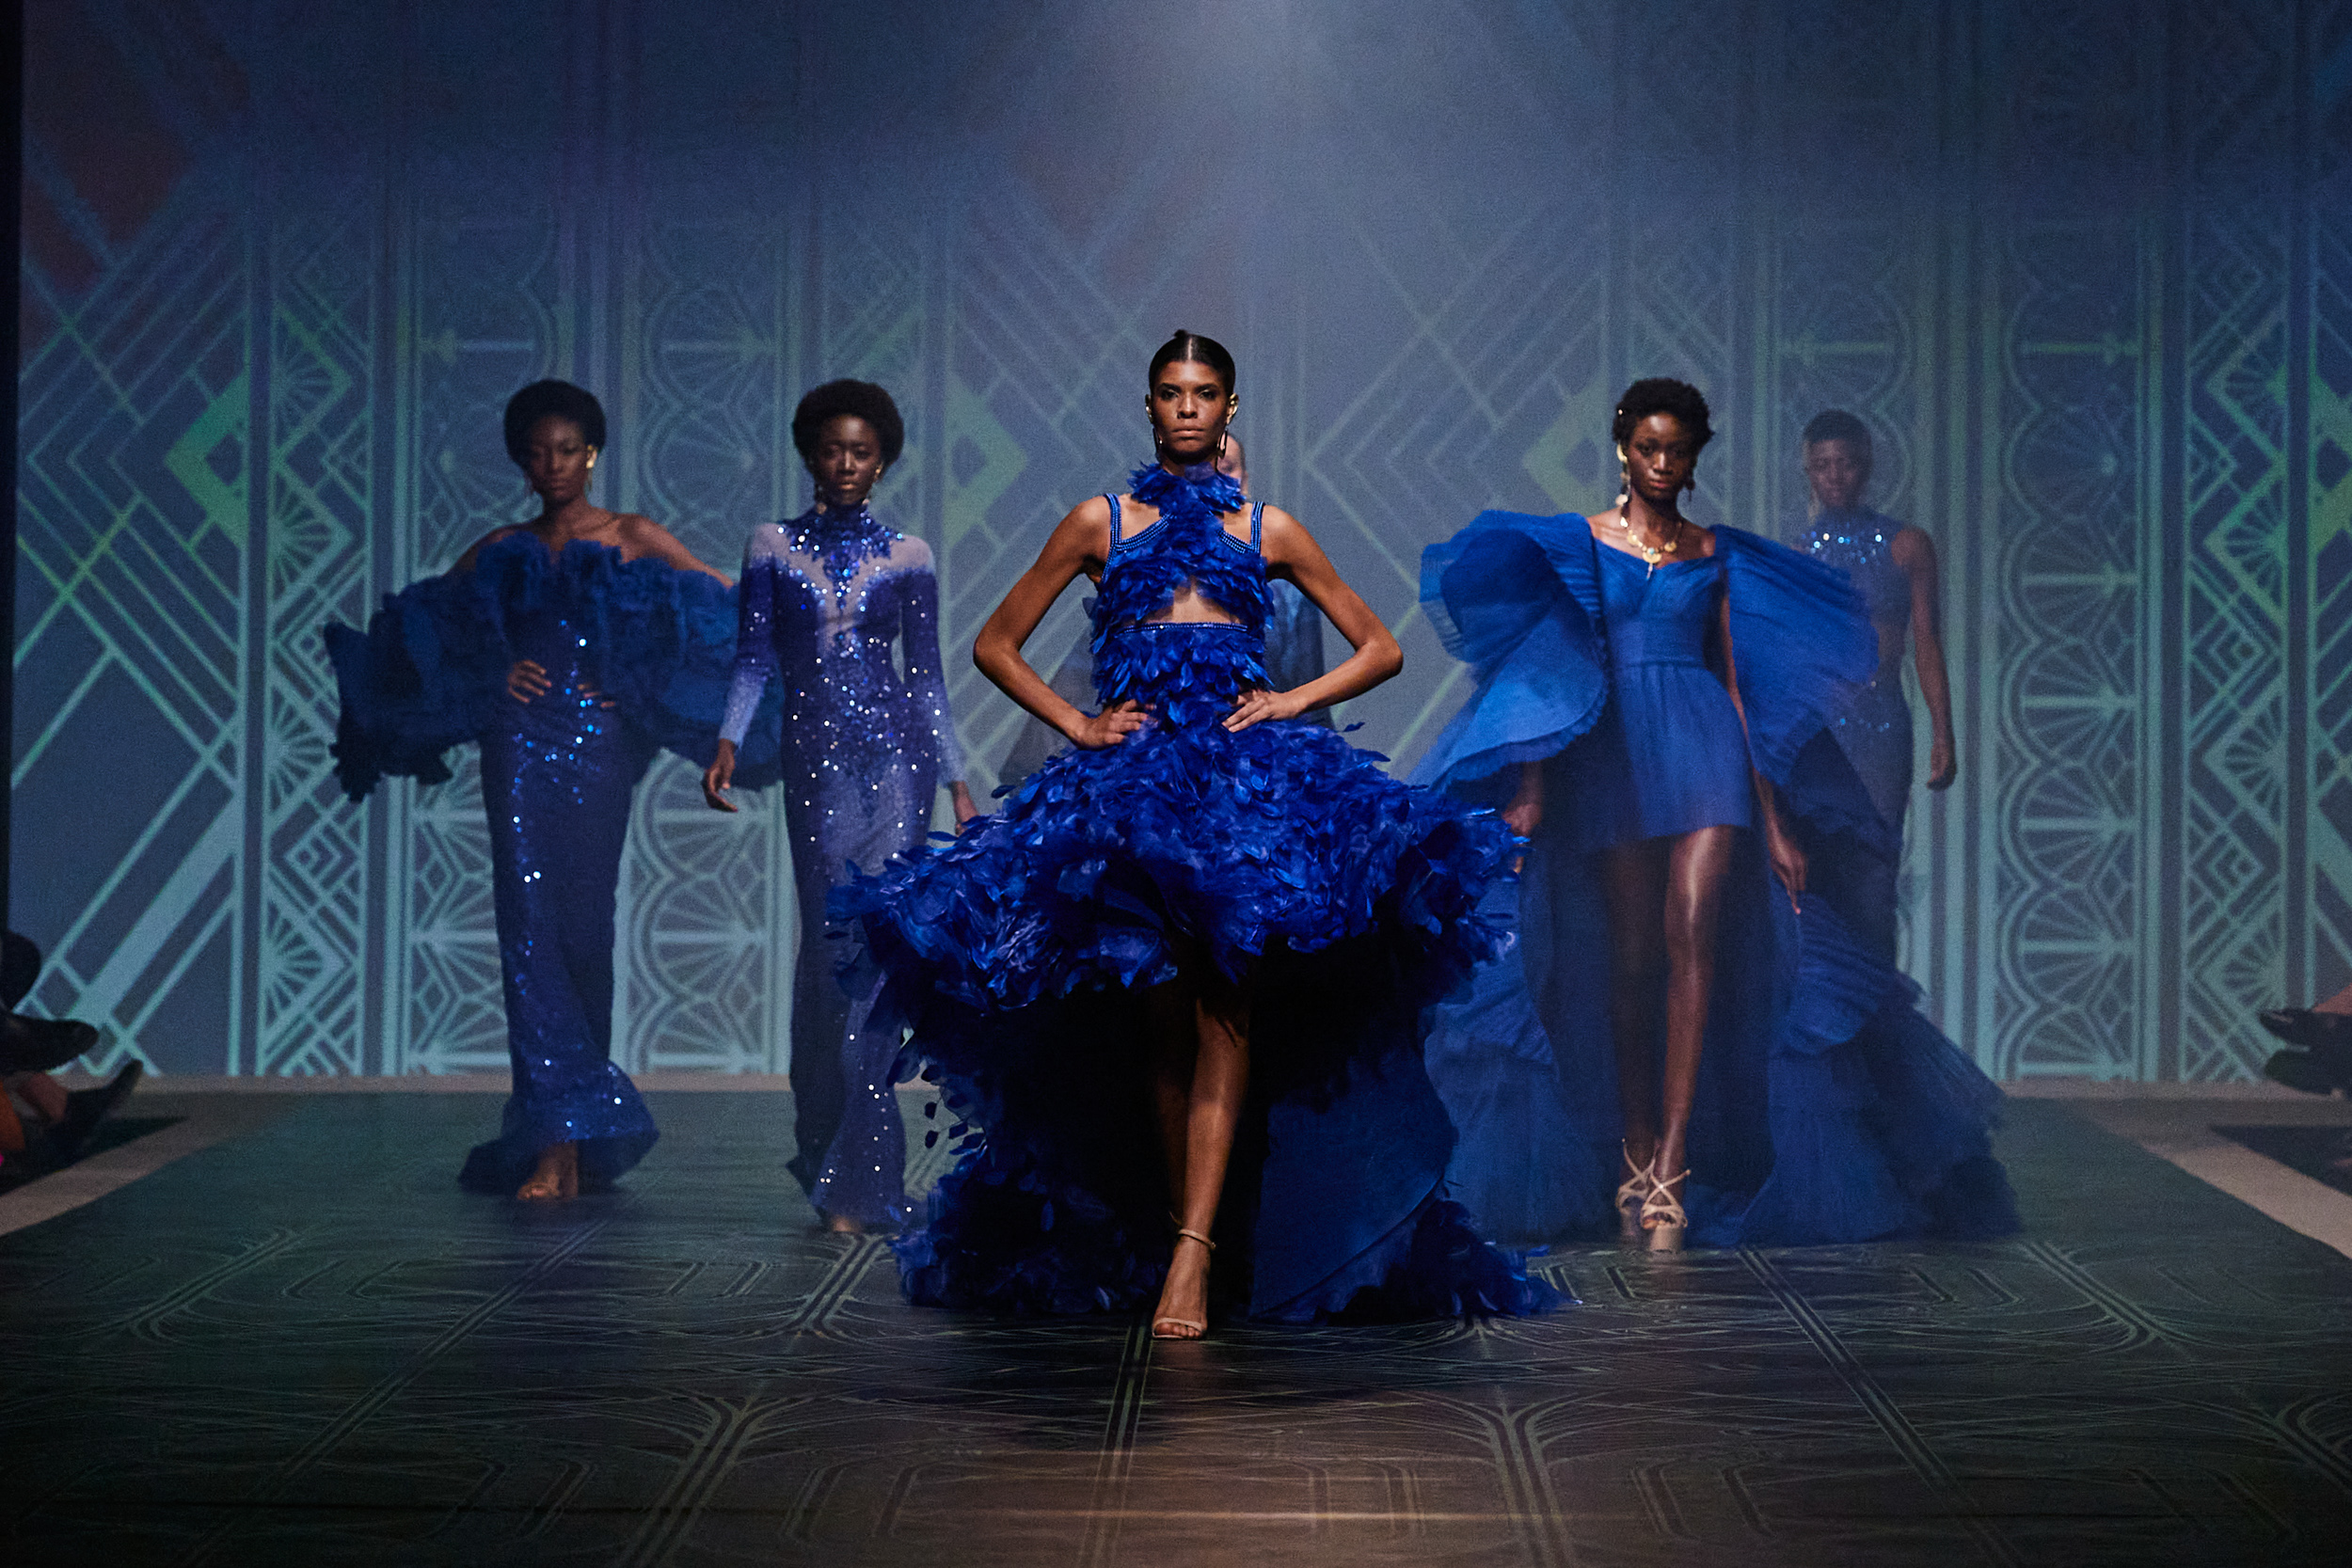 Michael Cinco Fall 2022 Couture Fashion Show 